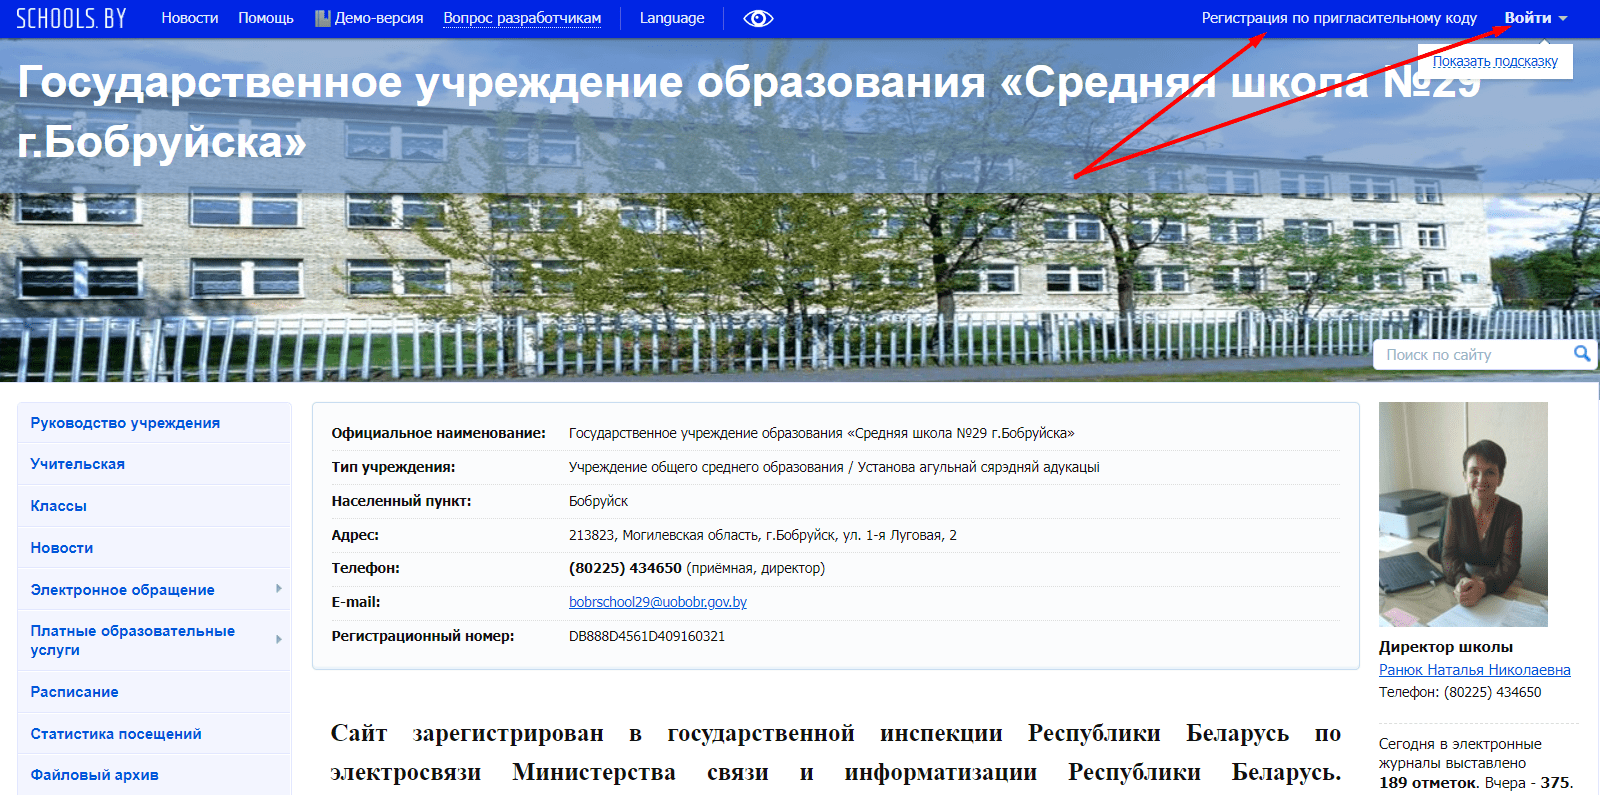 Средняя школа №29 г. Бобруйска (29bobruisk.schools.by)